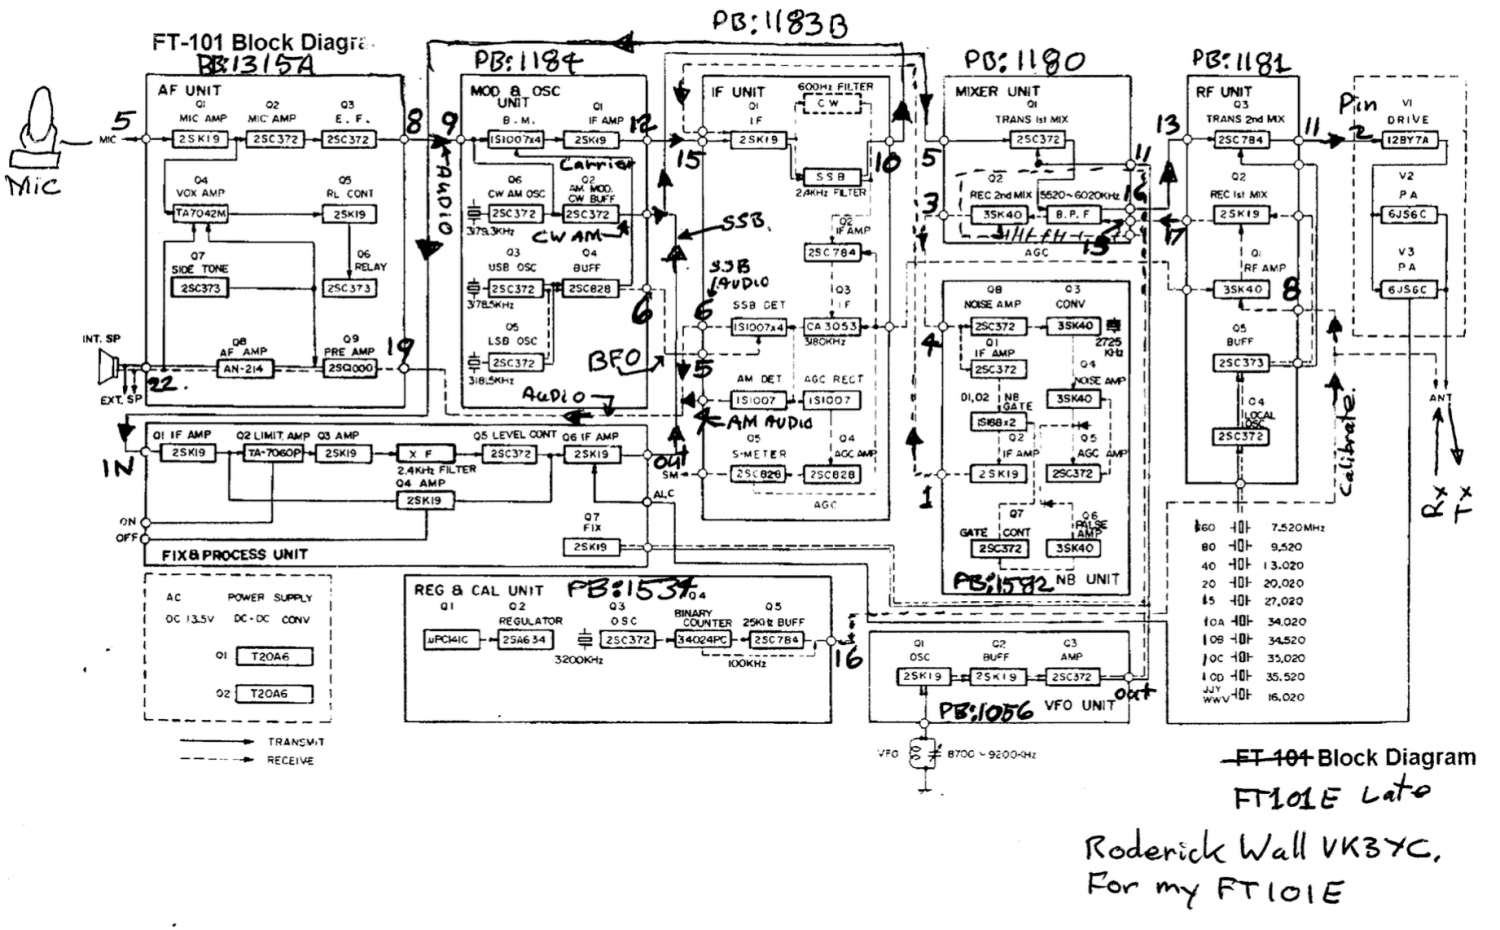 Yaesu FT-101E - Block Diagram 1 (By Roderick Wall VK3YC)